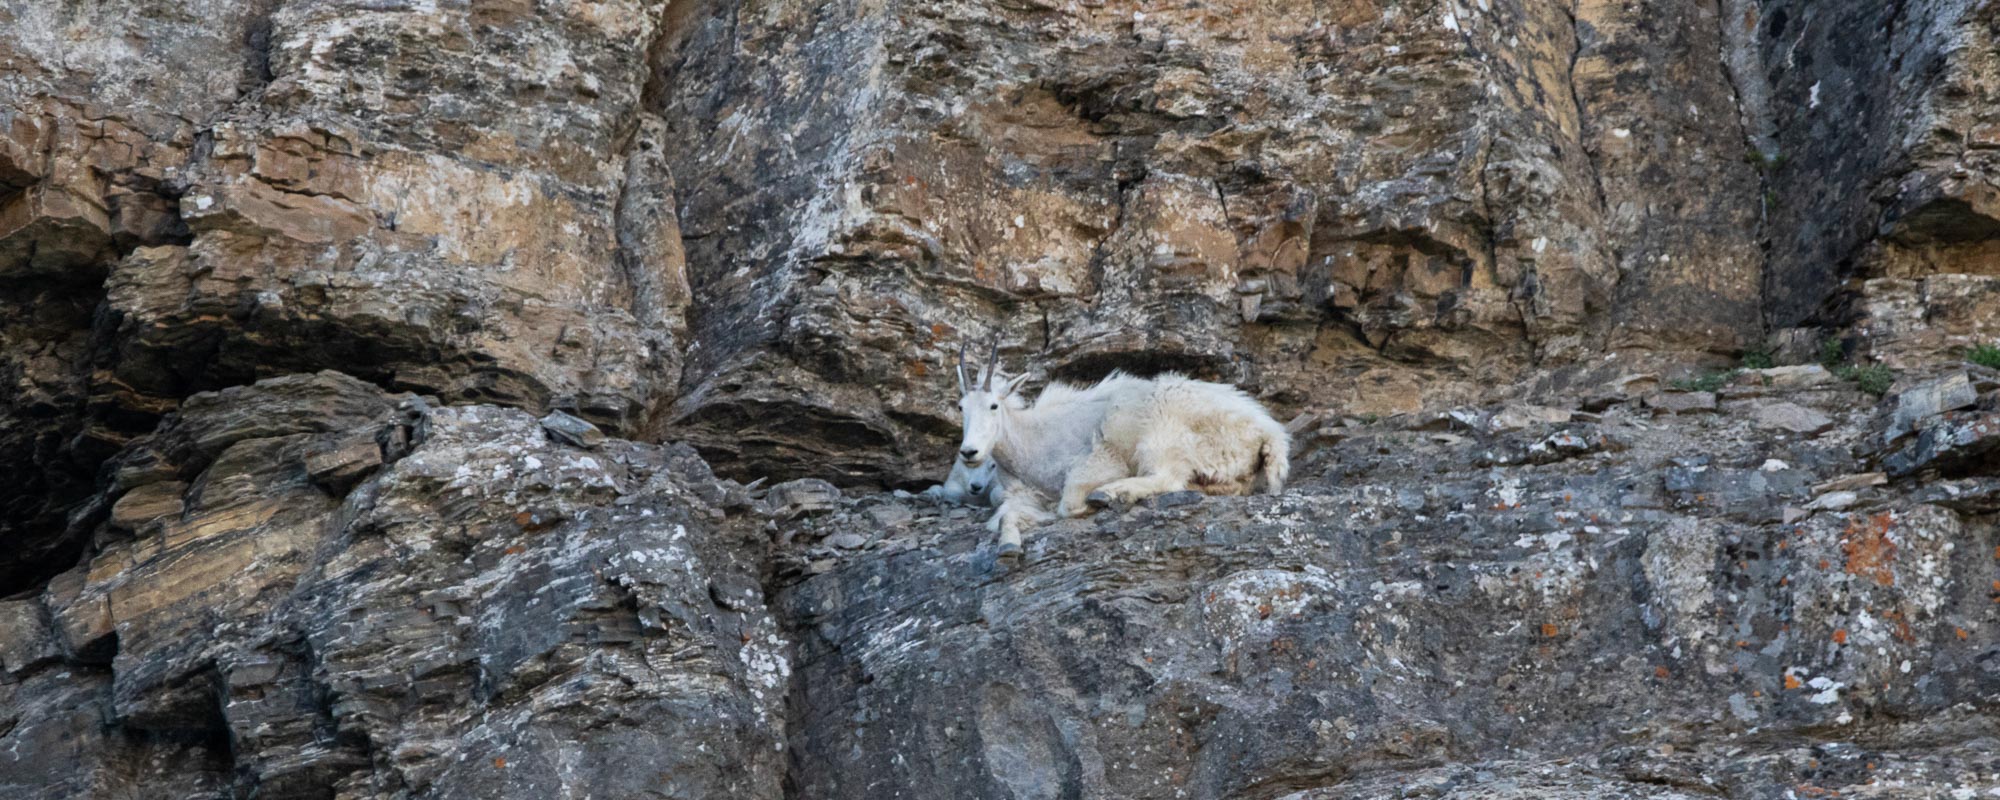 Glacier National Park - Mountain goats at Logan Pass